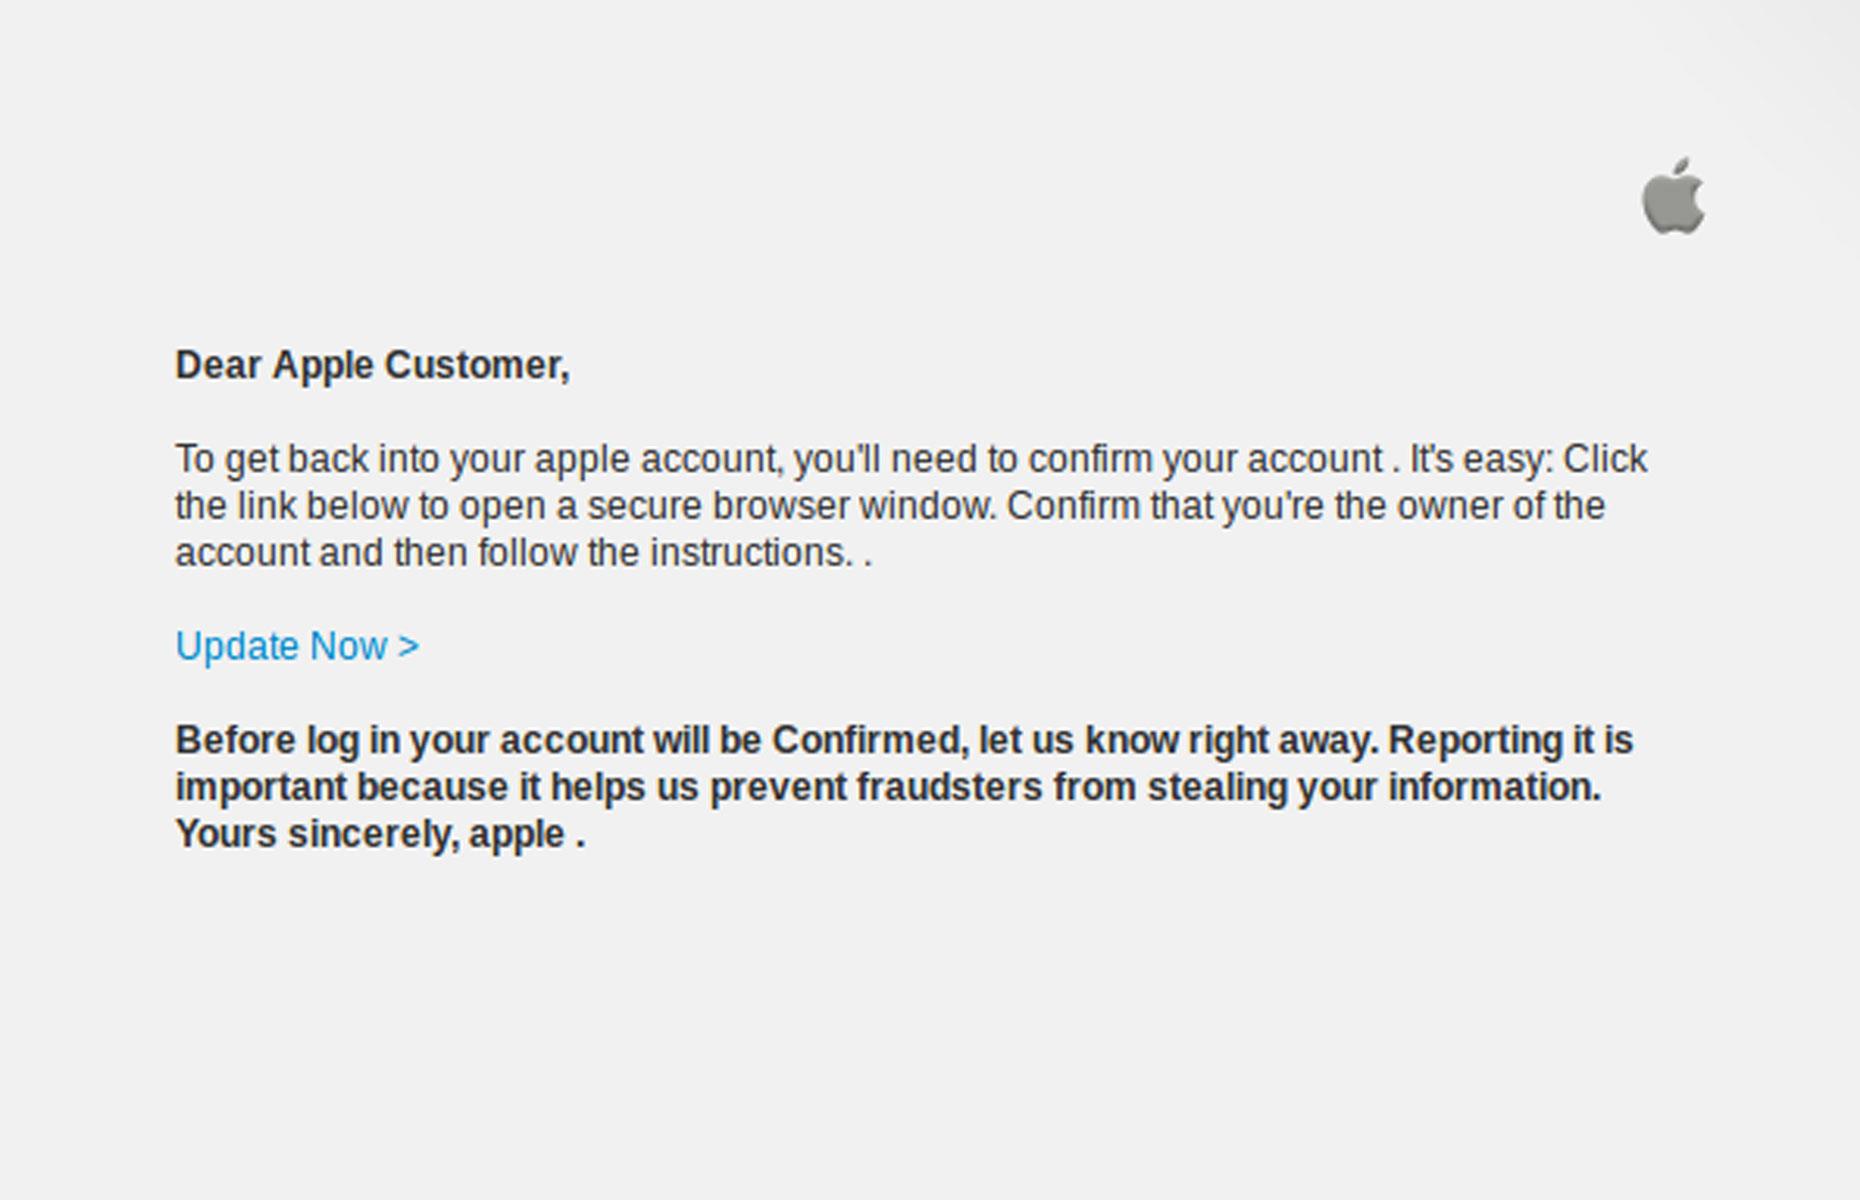 Fake Apple phishing emails